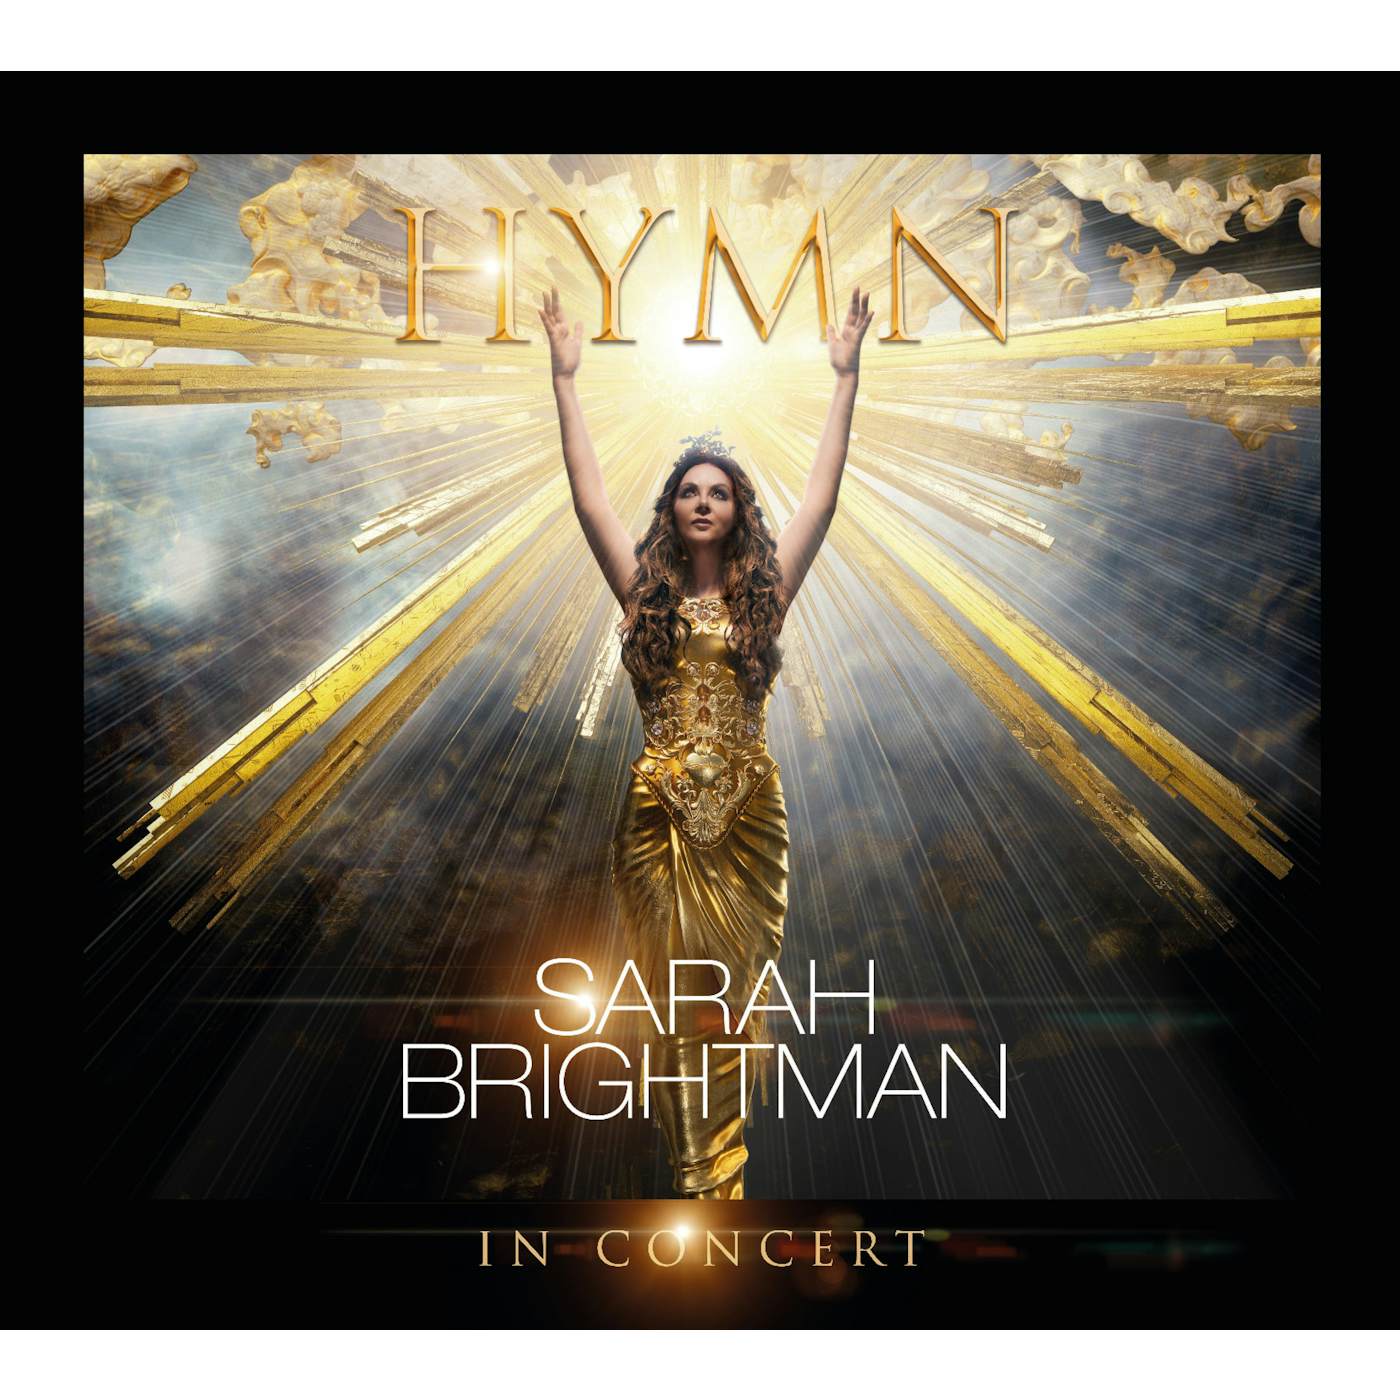 Sarah Brightman HYMN IN CONCERT - Deluxe Edition DVD/CD